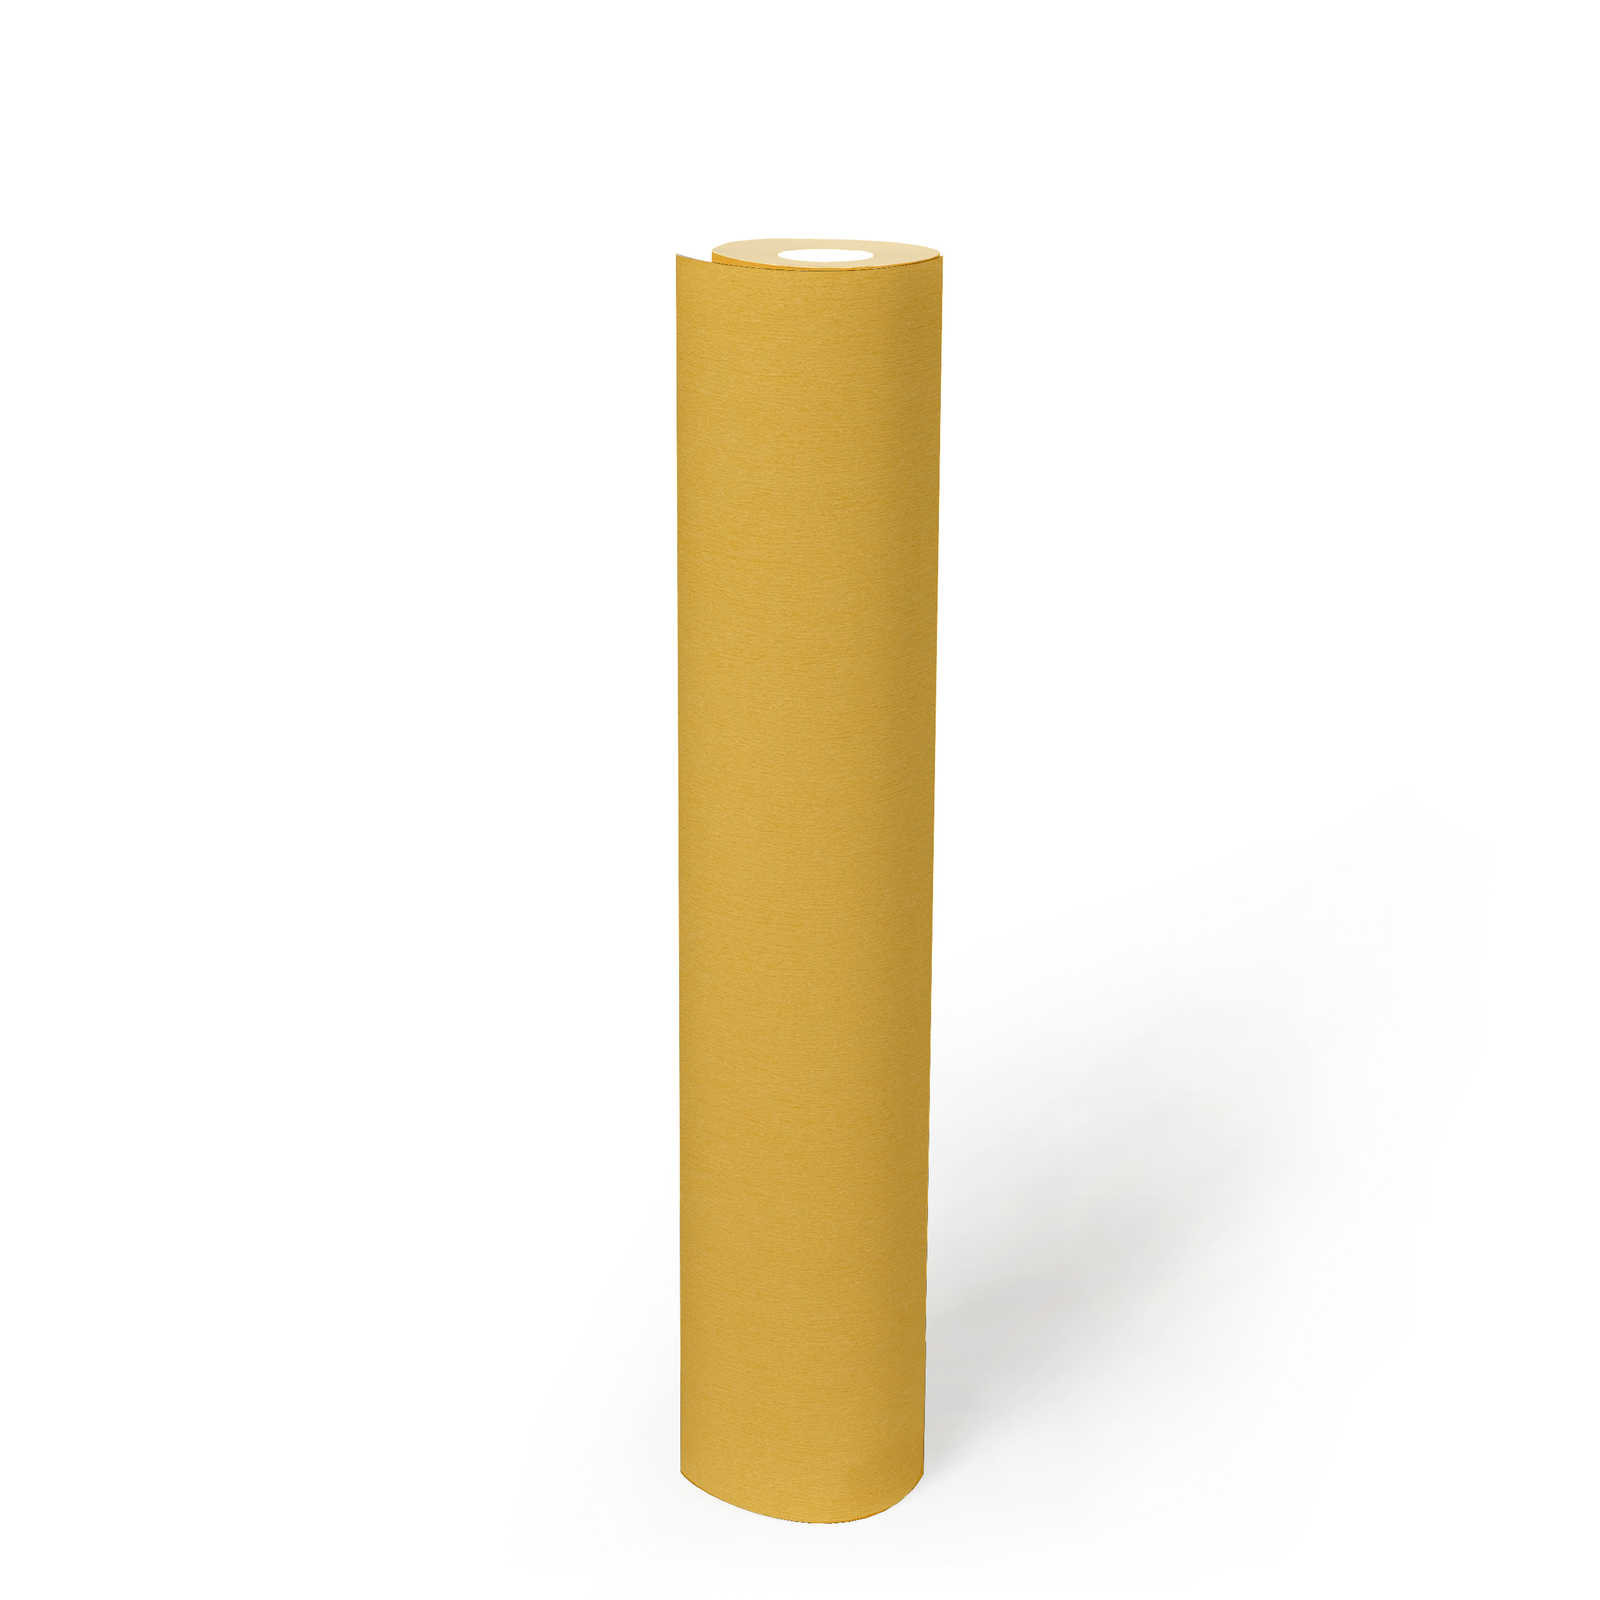             Papel pintado amarillo mostaza liso para guardería - Amarillo
        